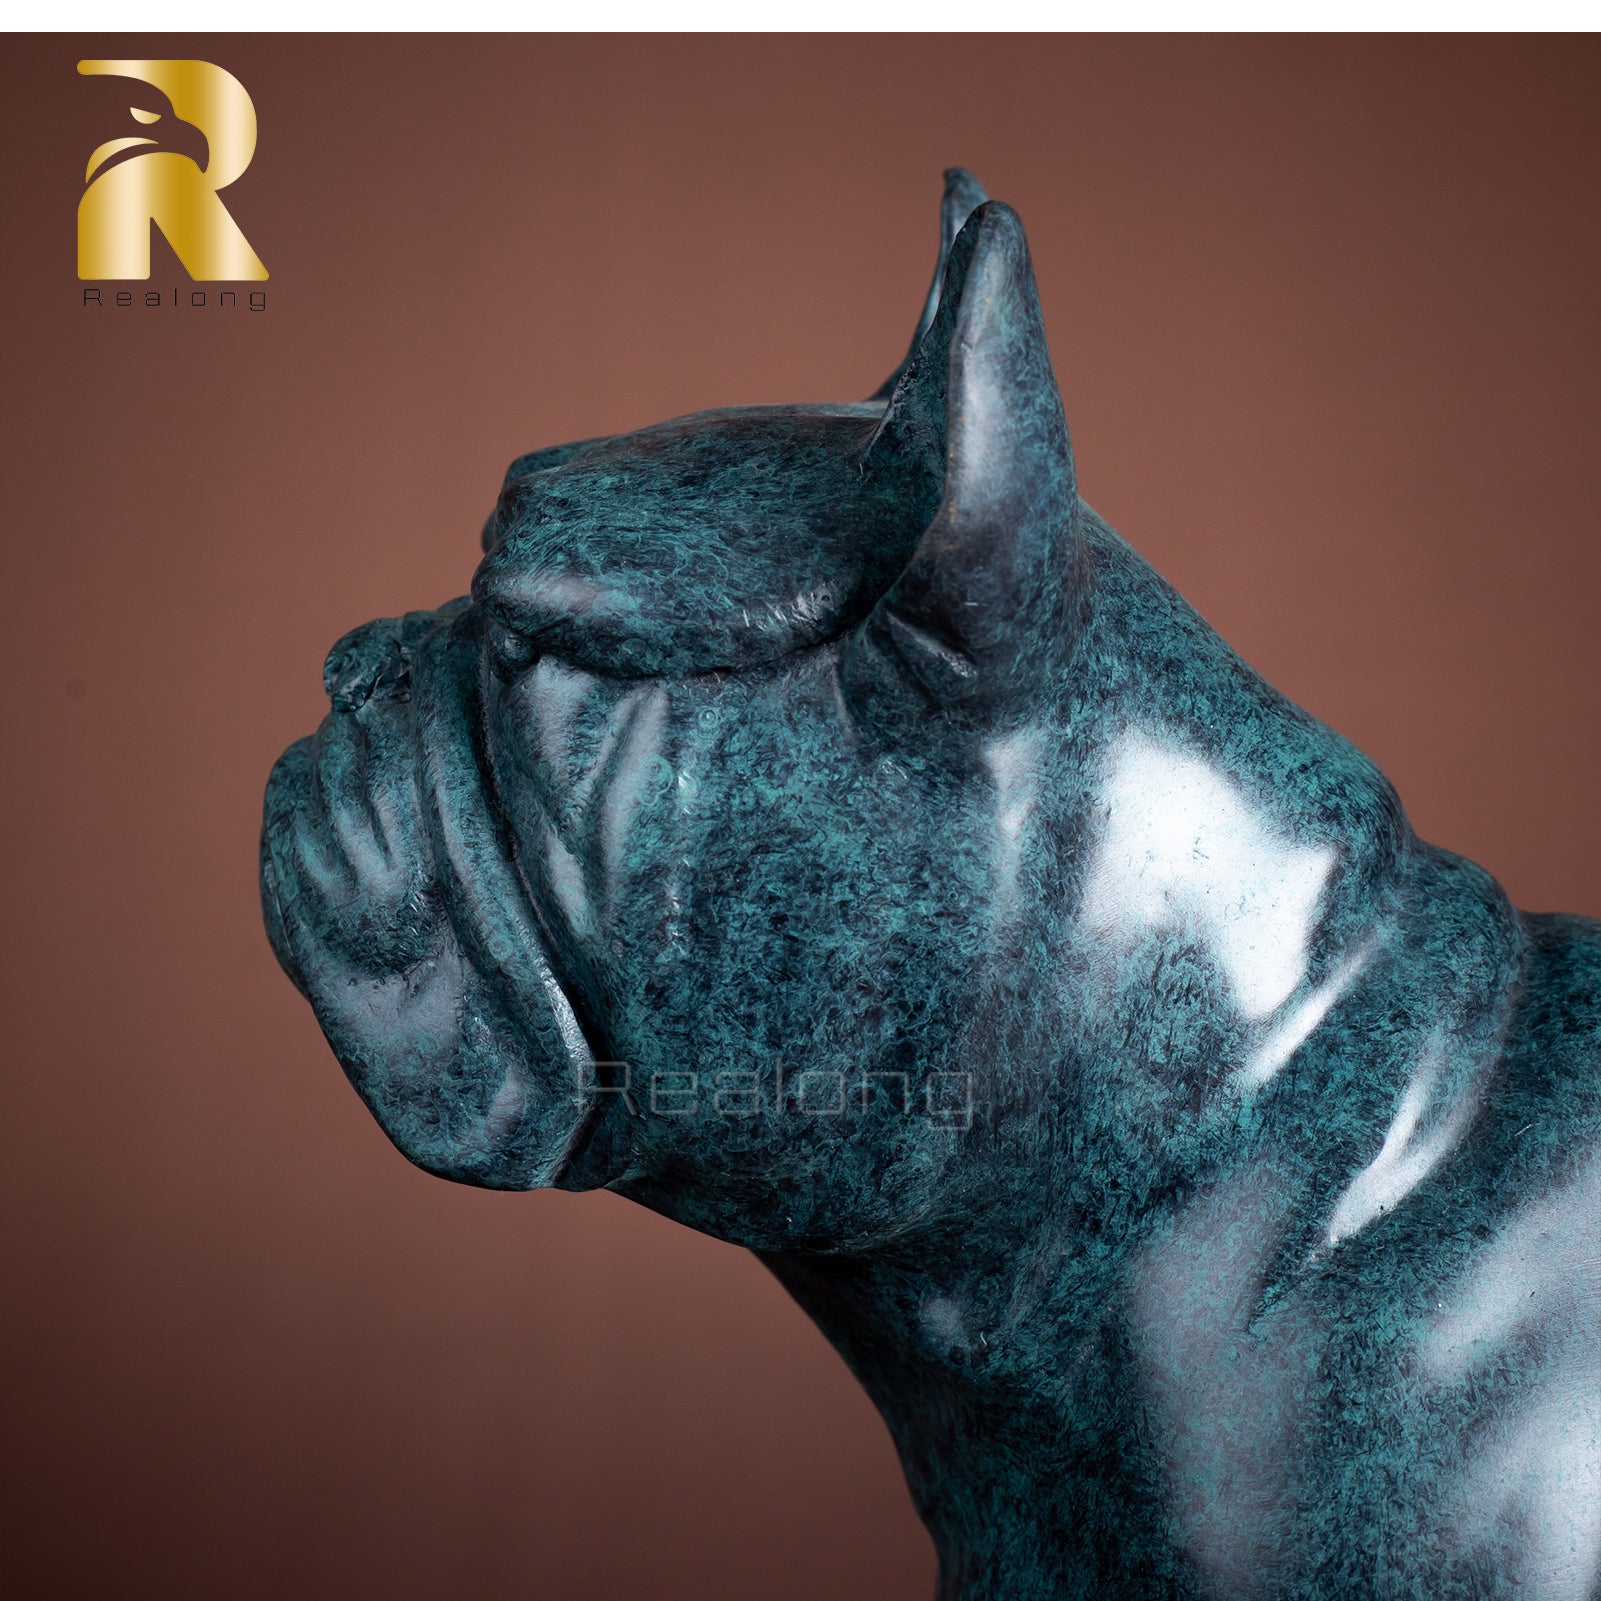 Dog Statue Bronze Sculpture Home Decor 38cm Bulldog Sculpture 100% Bronze Statue For Family Friend